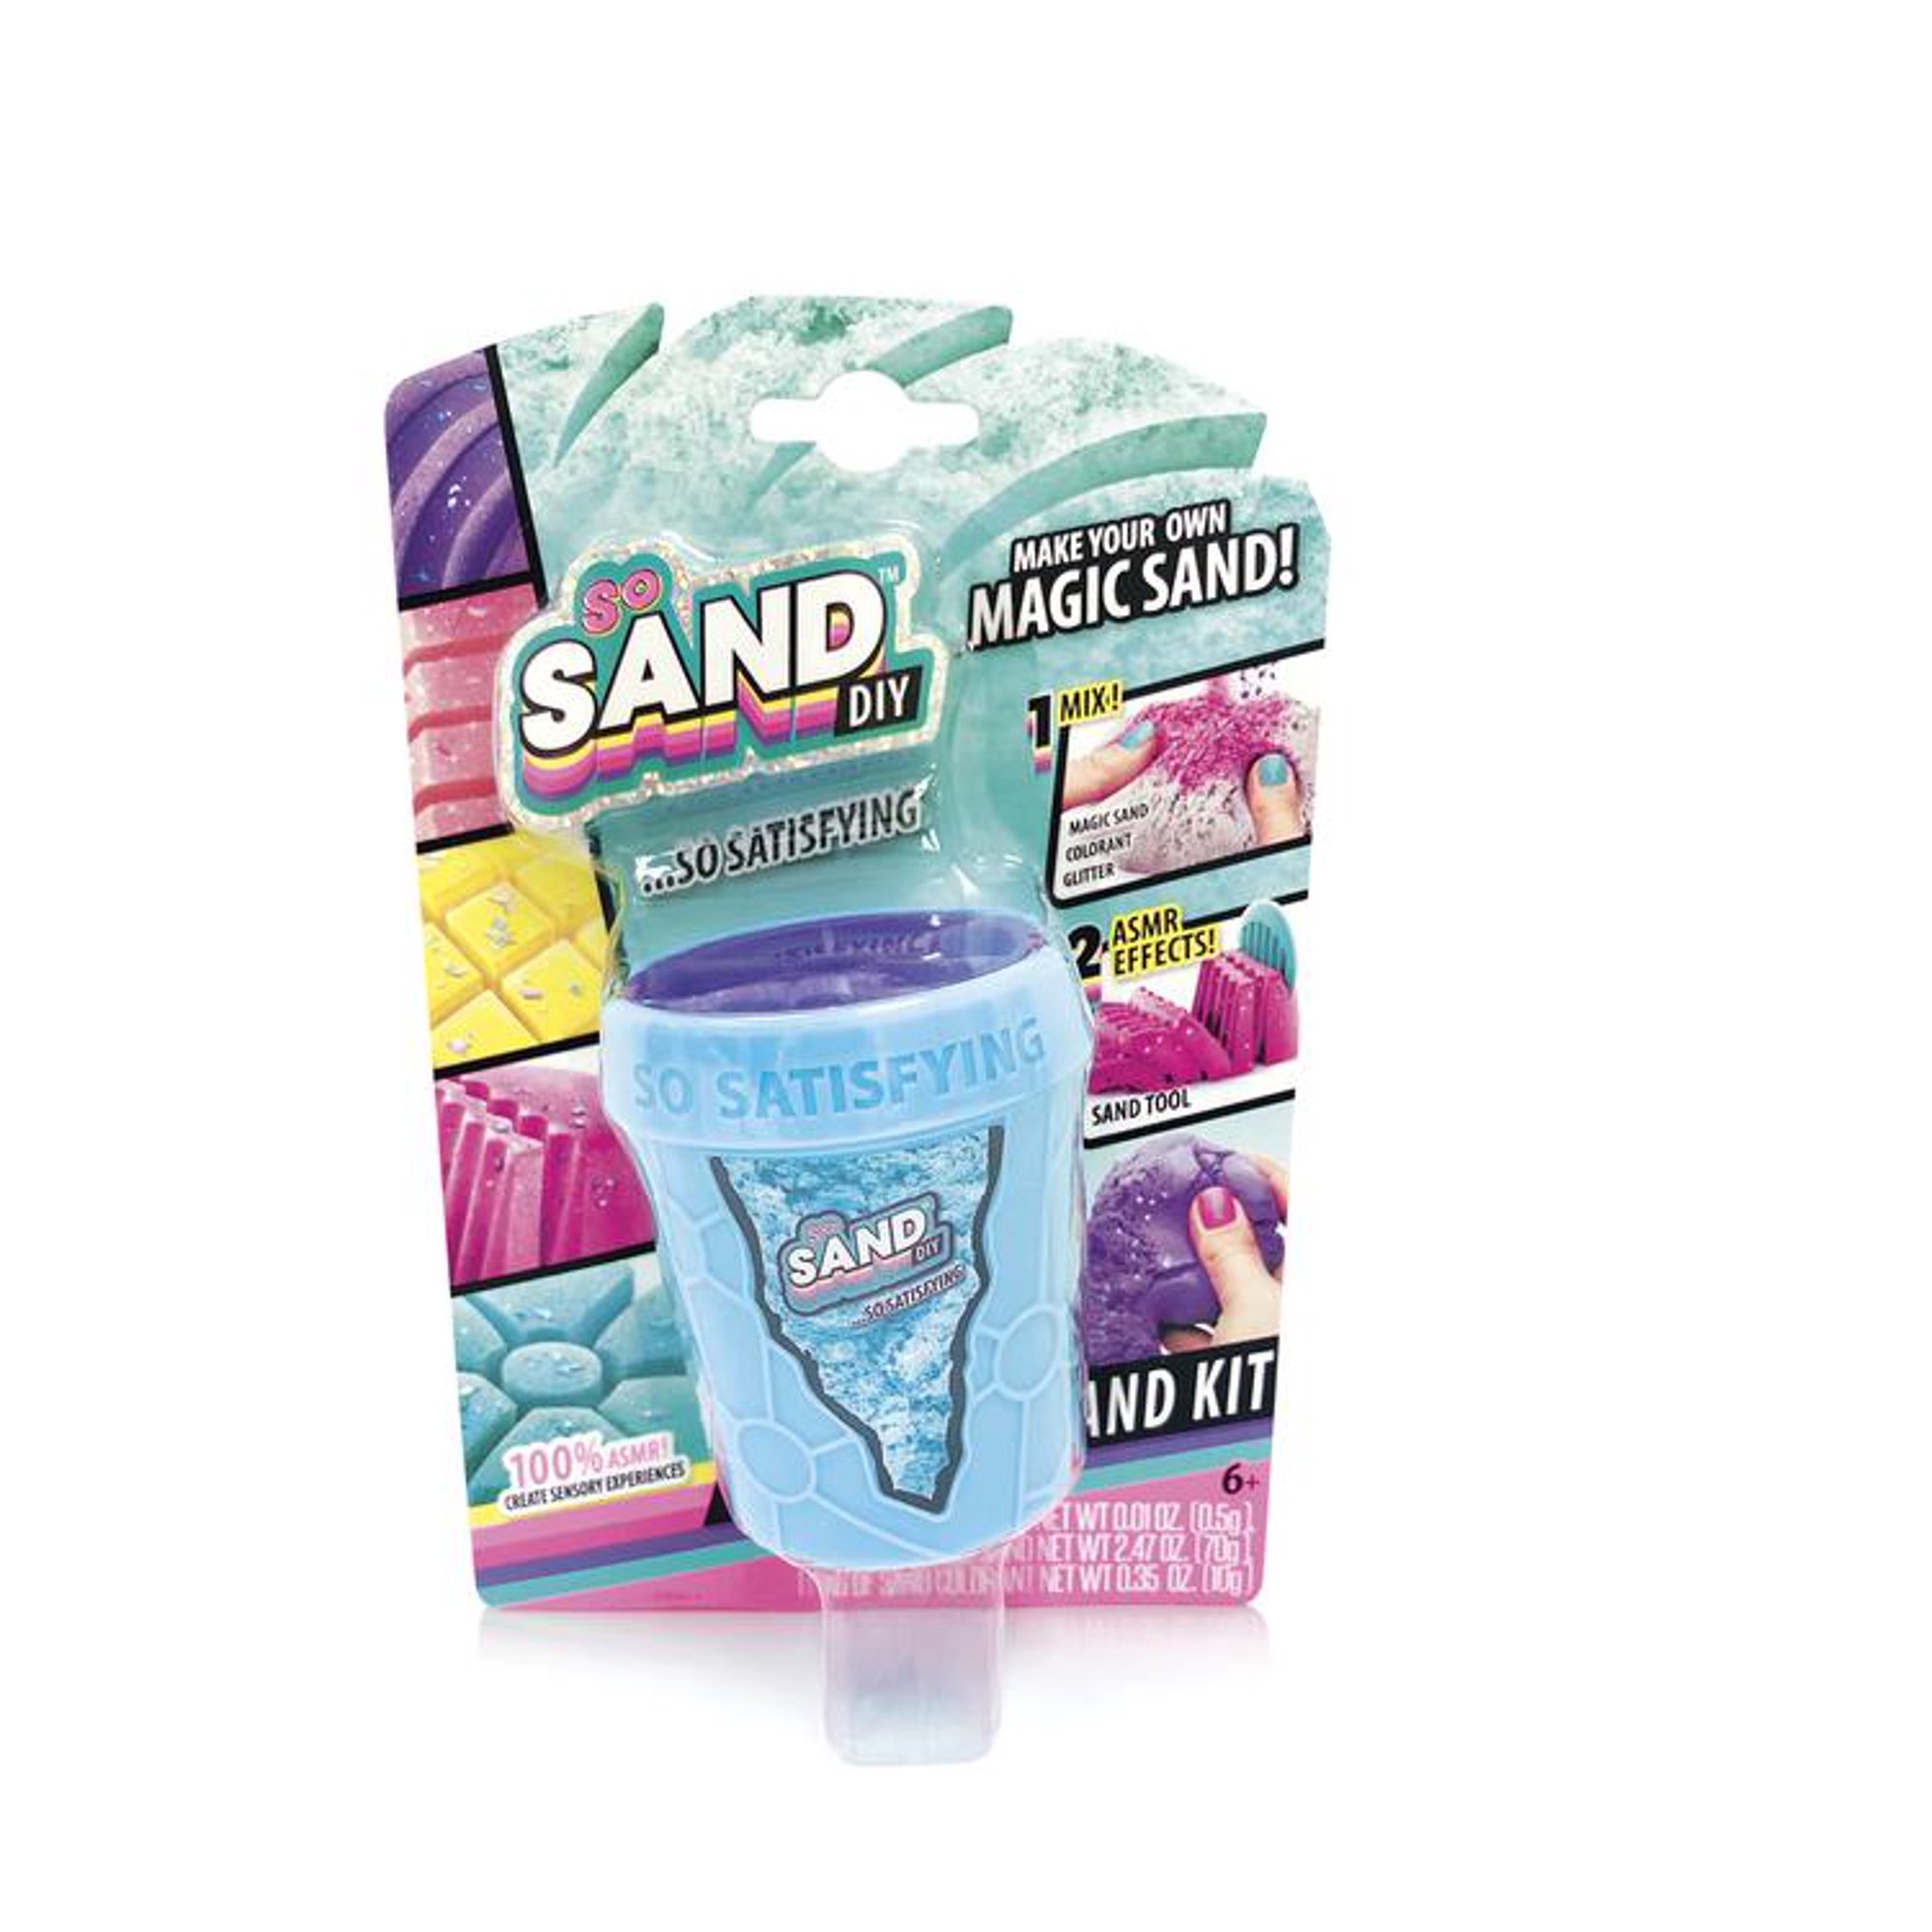 So Sand diy kit satisfaisant sable magique+6ans – Orca